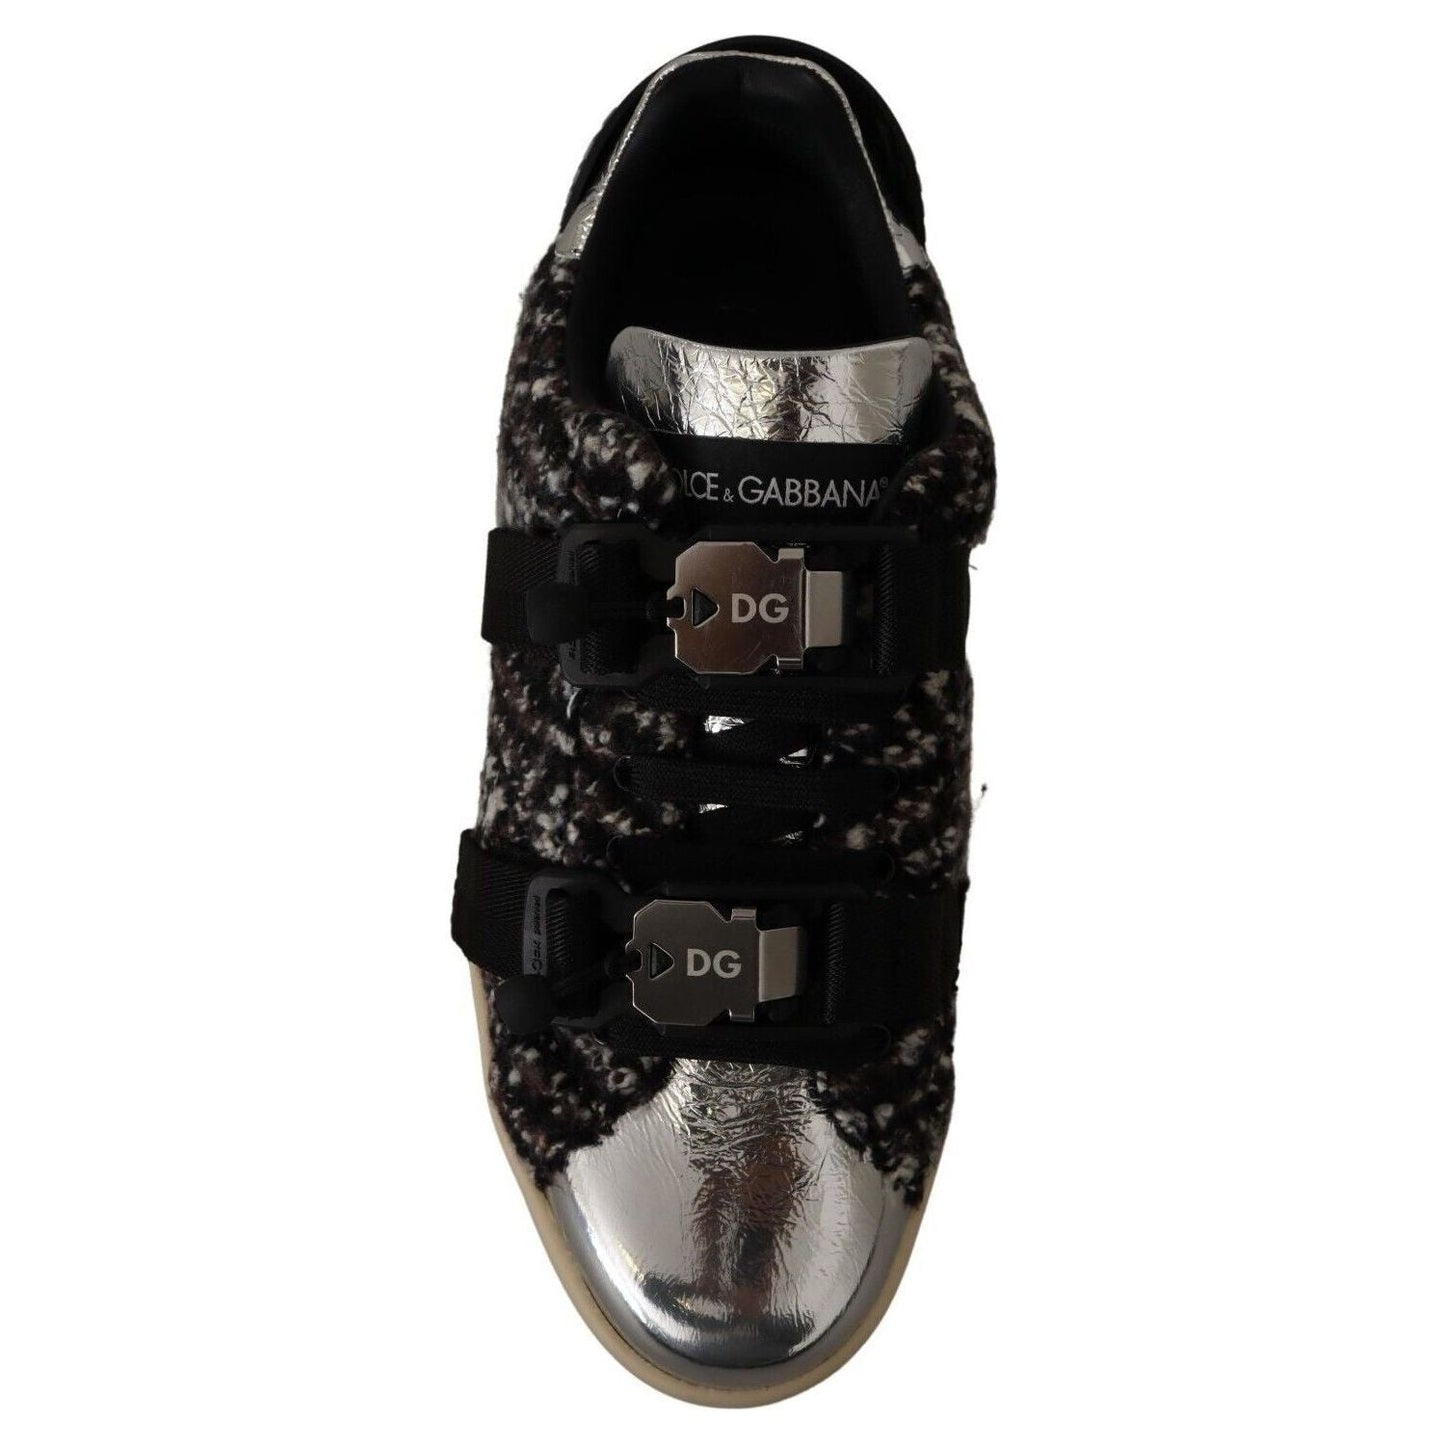 Dolce & Gabbana Silver Elegance Leather Sneakers silver-leather-brown-cotton-wool-sneakers-shoes s-l1600-5-12-b9a48af6-2df.jpg